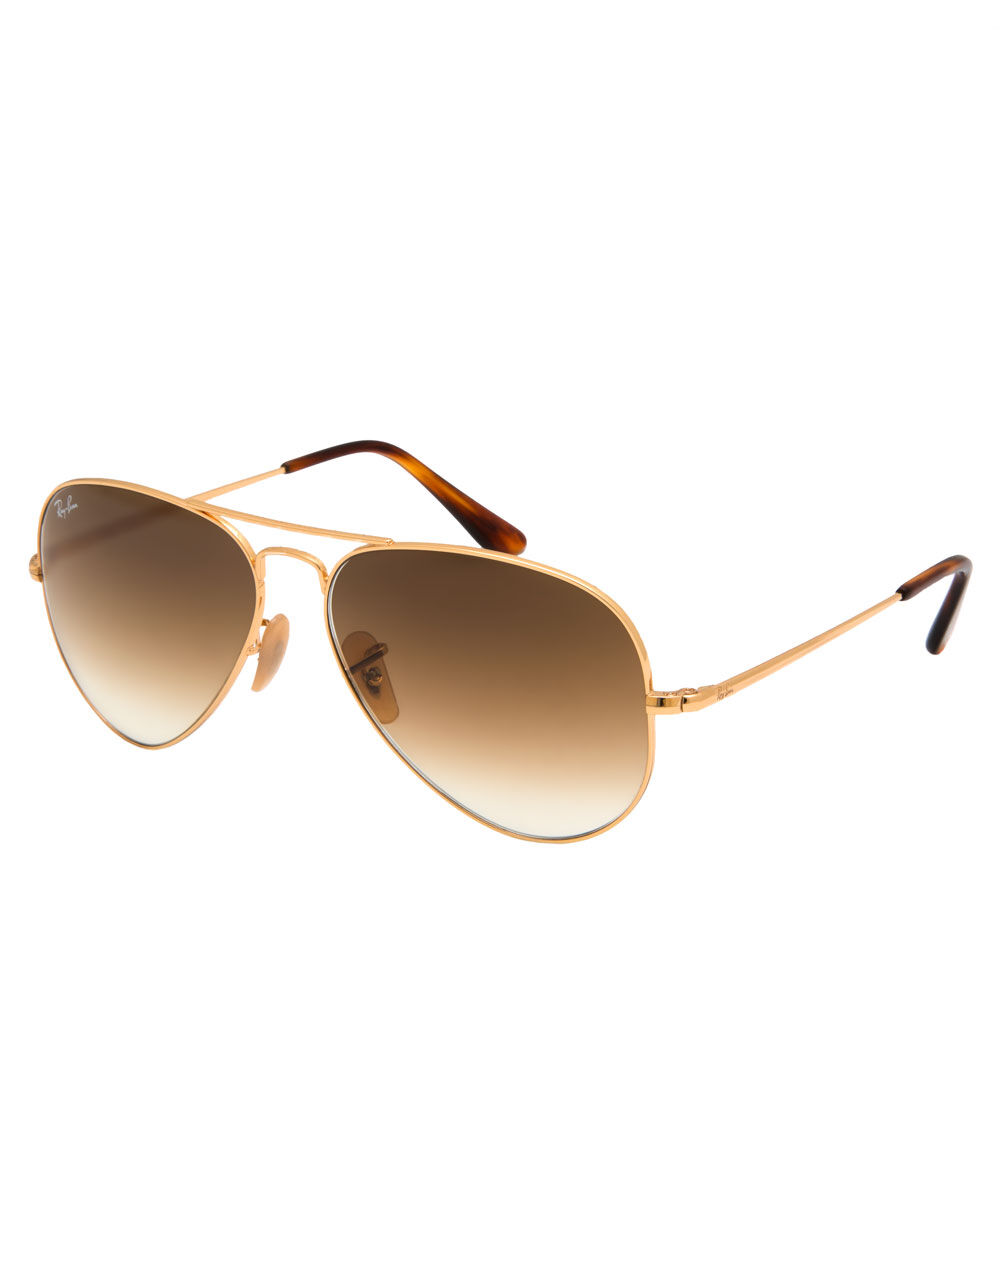 RAY-BAN RB3689 Aviator Gold & Light Gradient Sunglasses - GOLD/LIGHT BROWN | Tillys